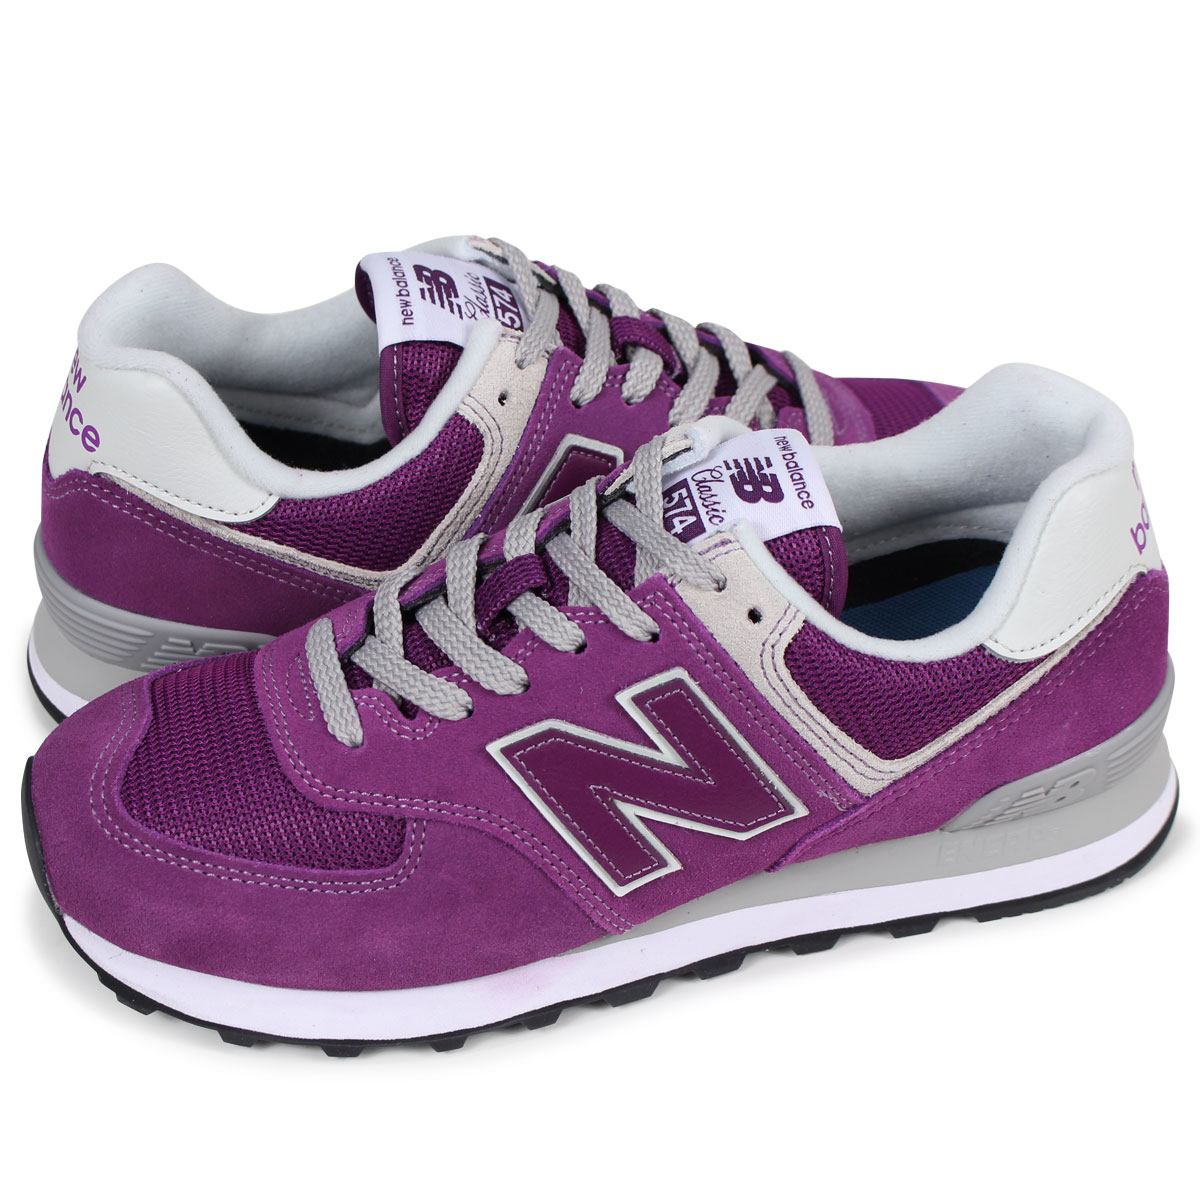 Venta > new balance 574 grey purple > en stock